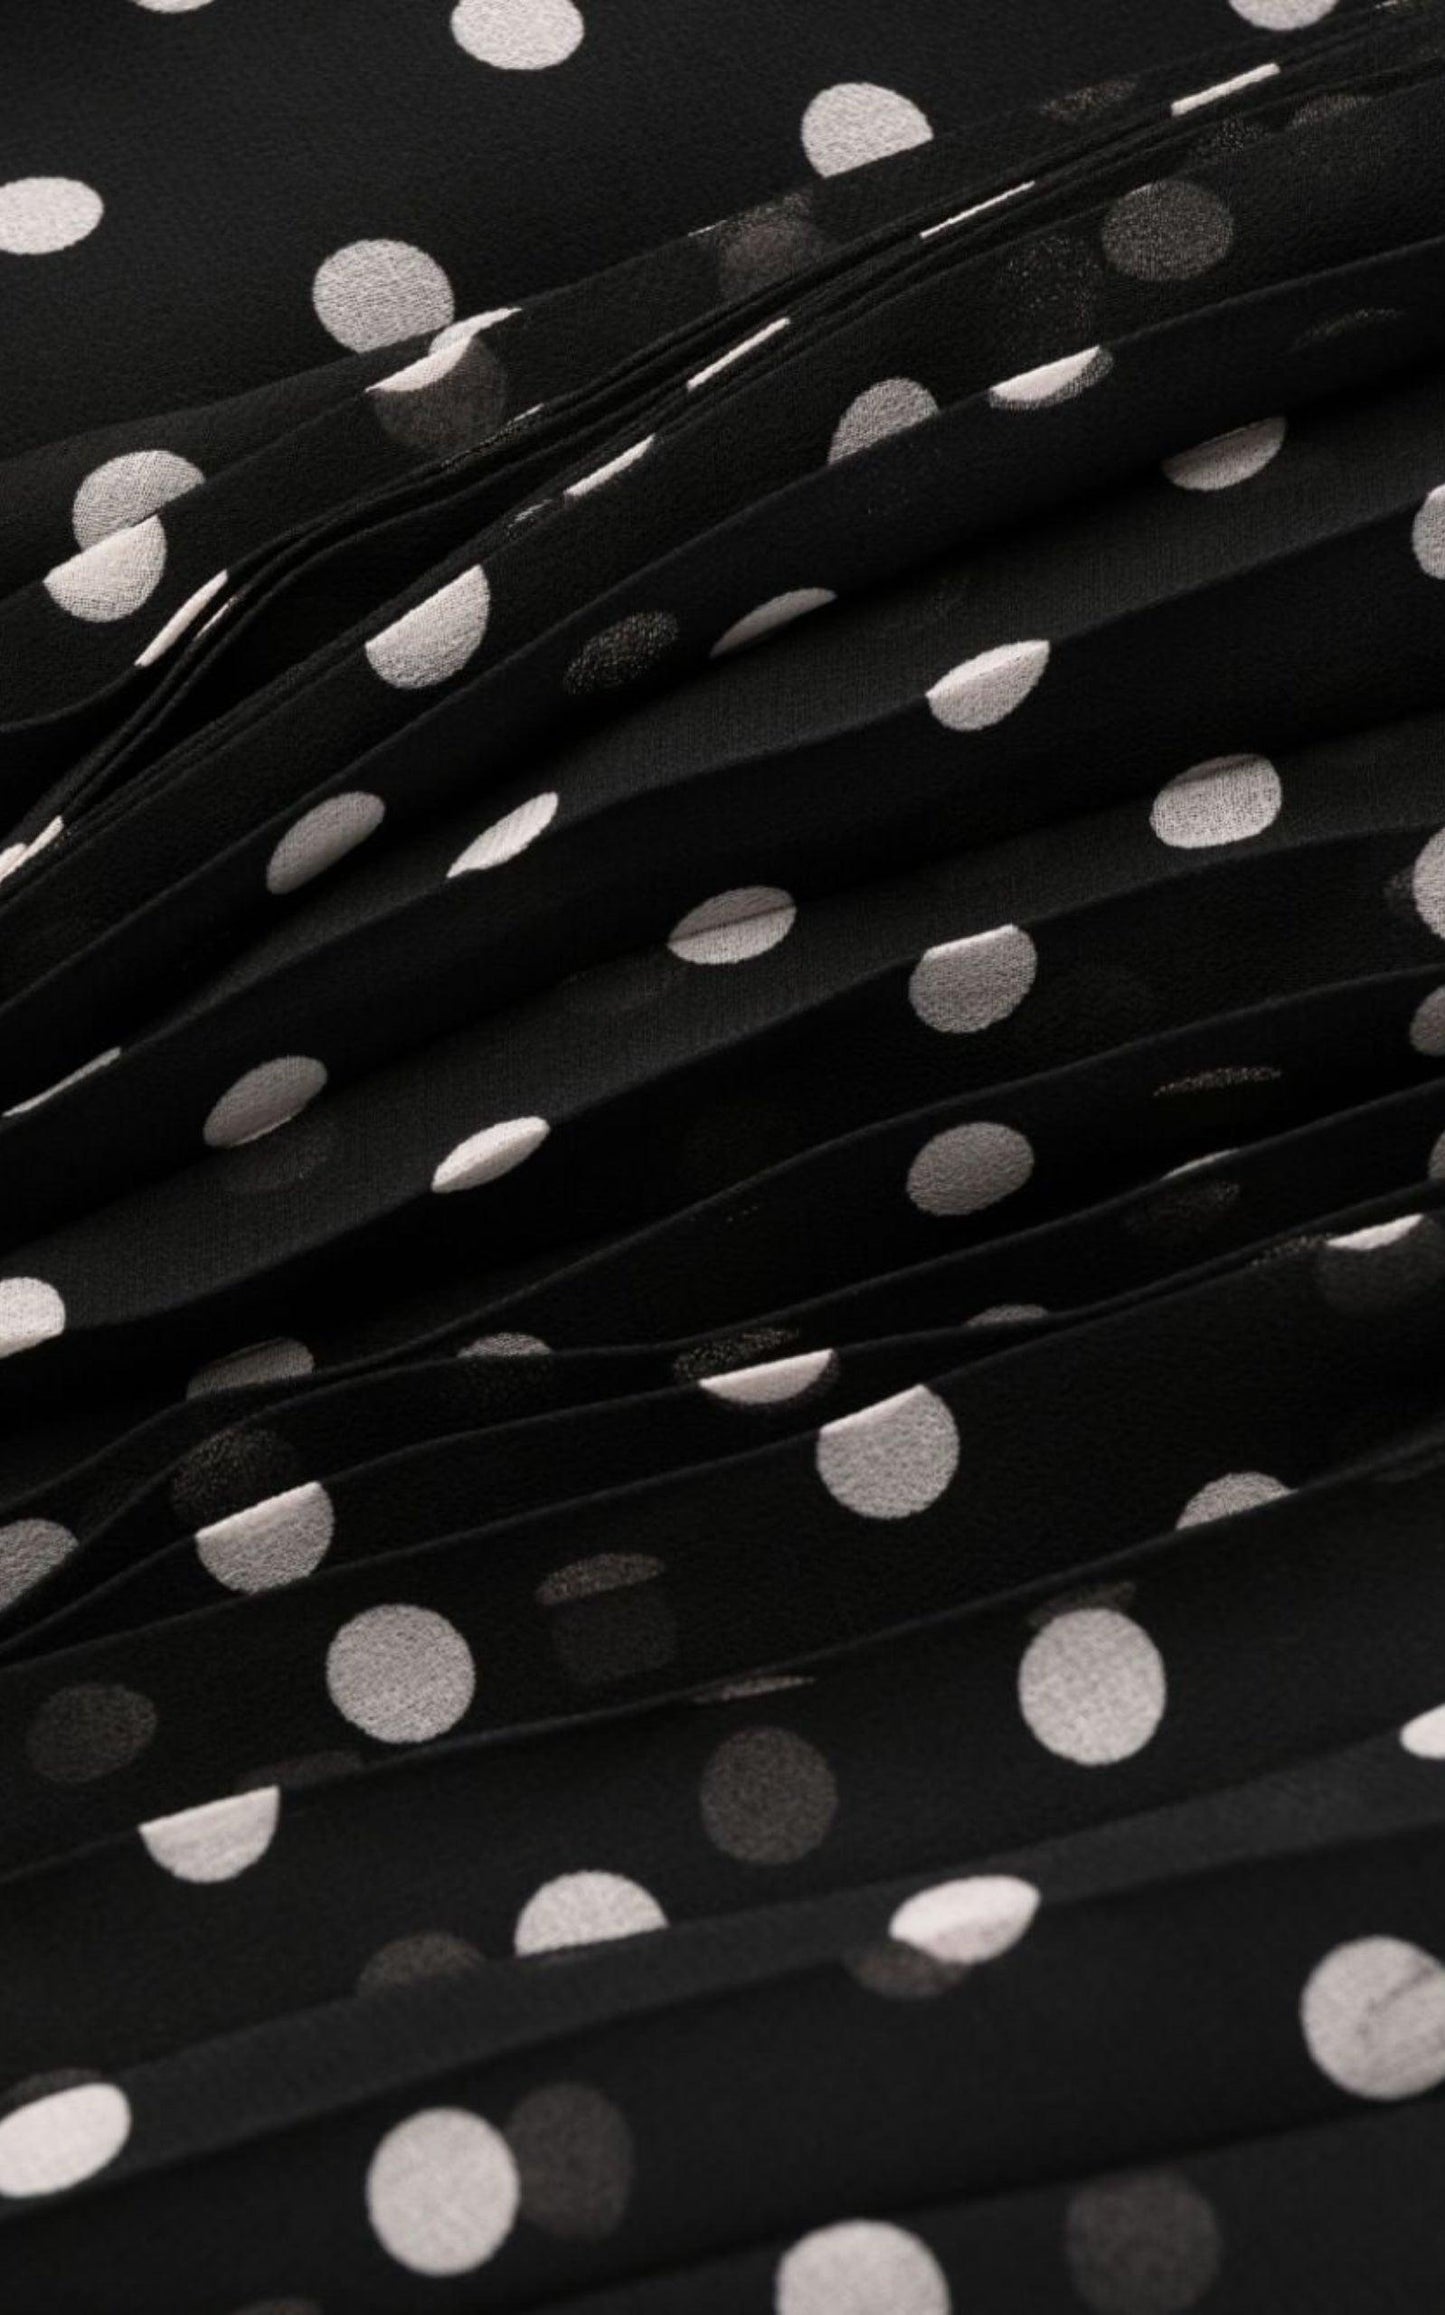 Polka Dot-print Pleated Dress-Mini Dresses-Zimmermann-1 / M-Black-Polyester-Runway Catalog